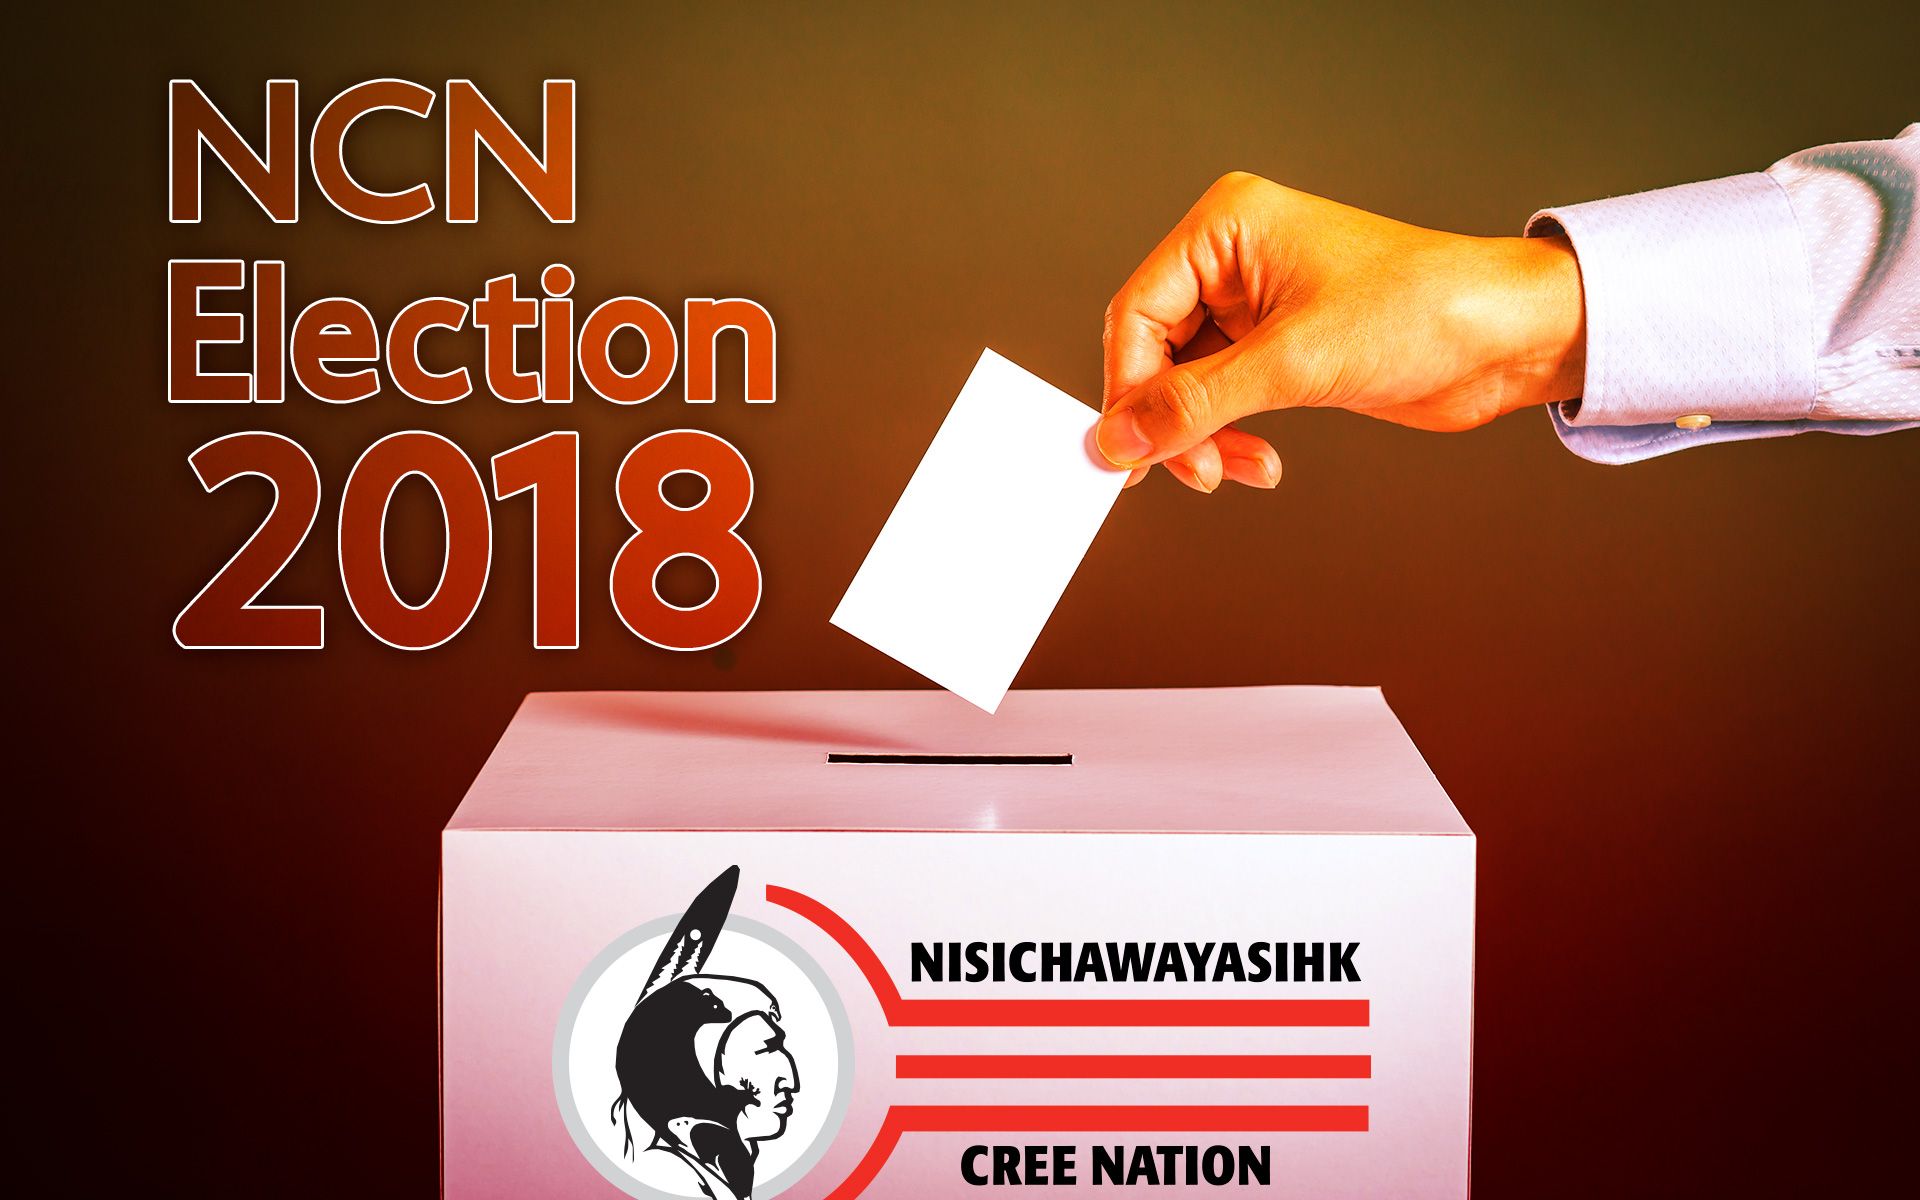 NCN Election 2018